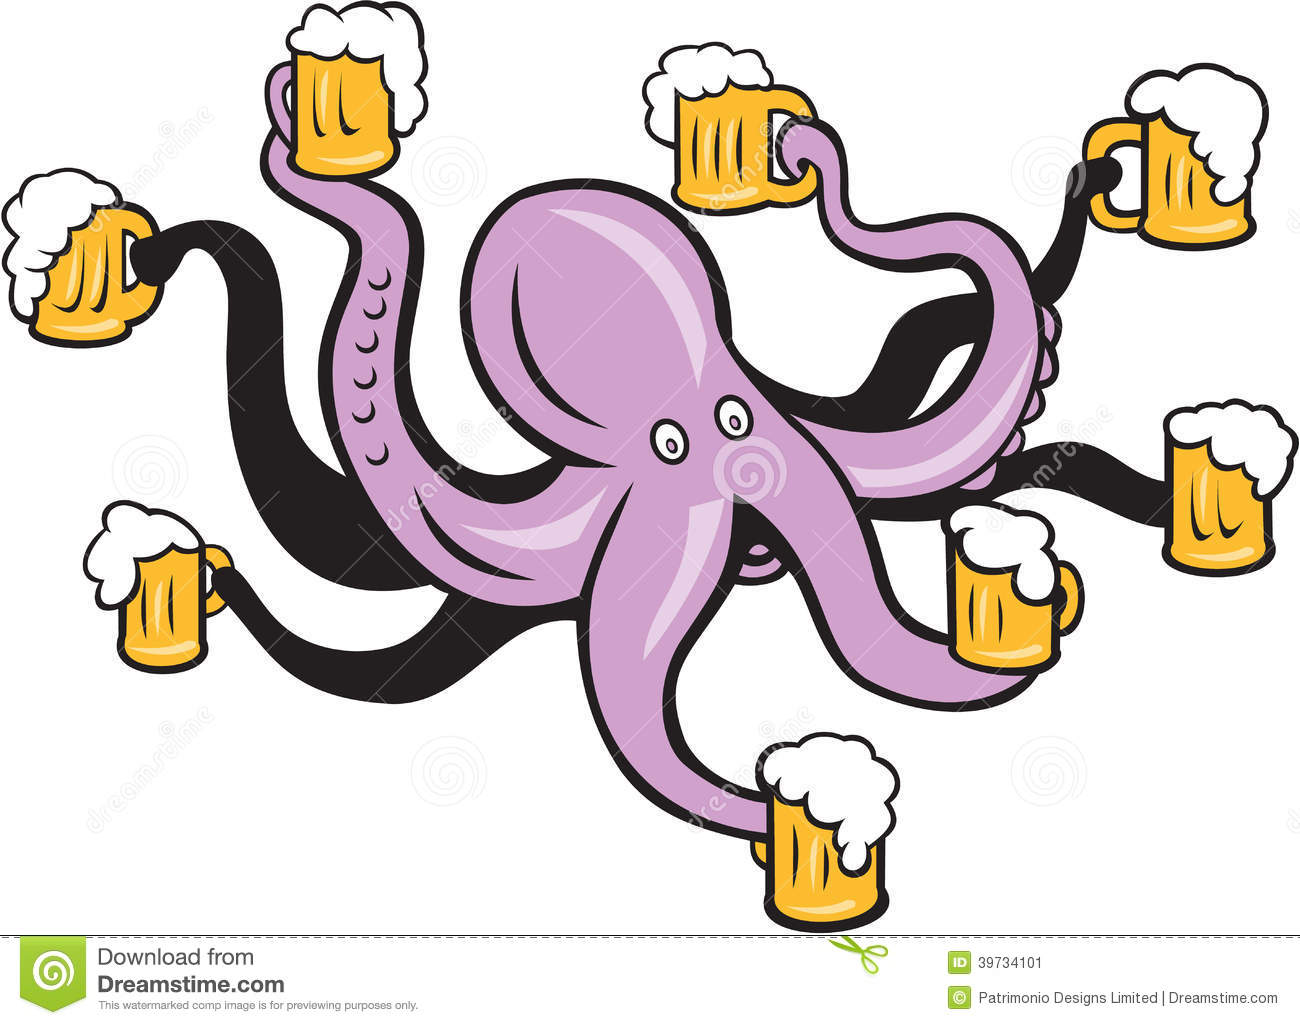 octopus-holding-mug-beer-tentacles-illustration-isolated-background-done-cartoon-style-39734101.jpg